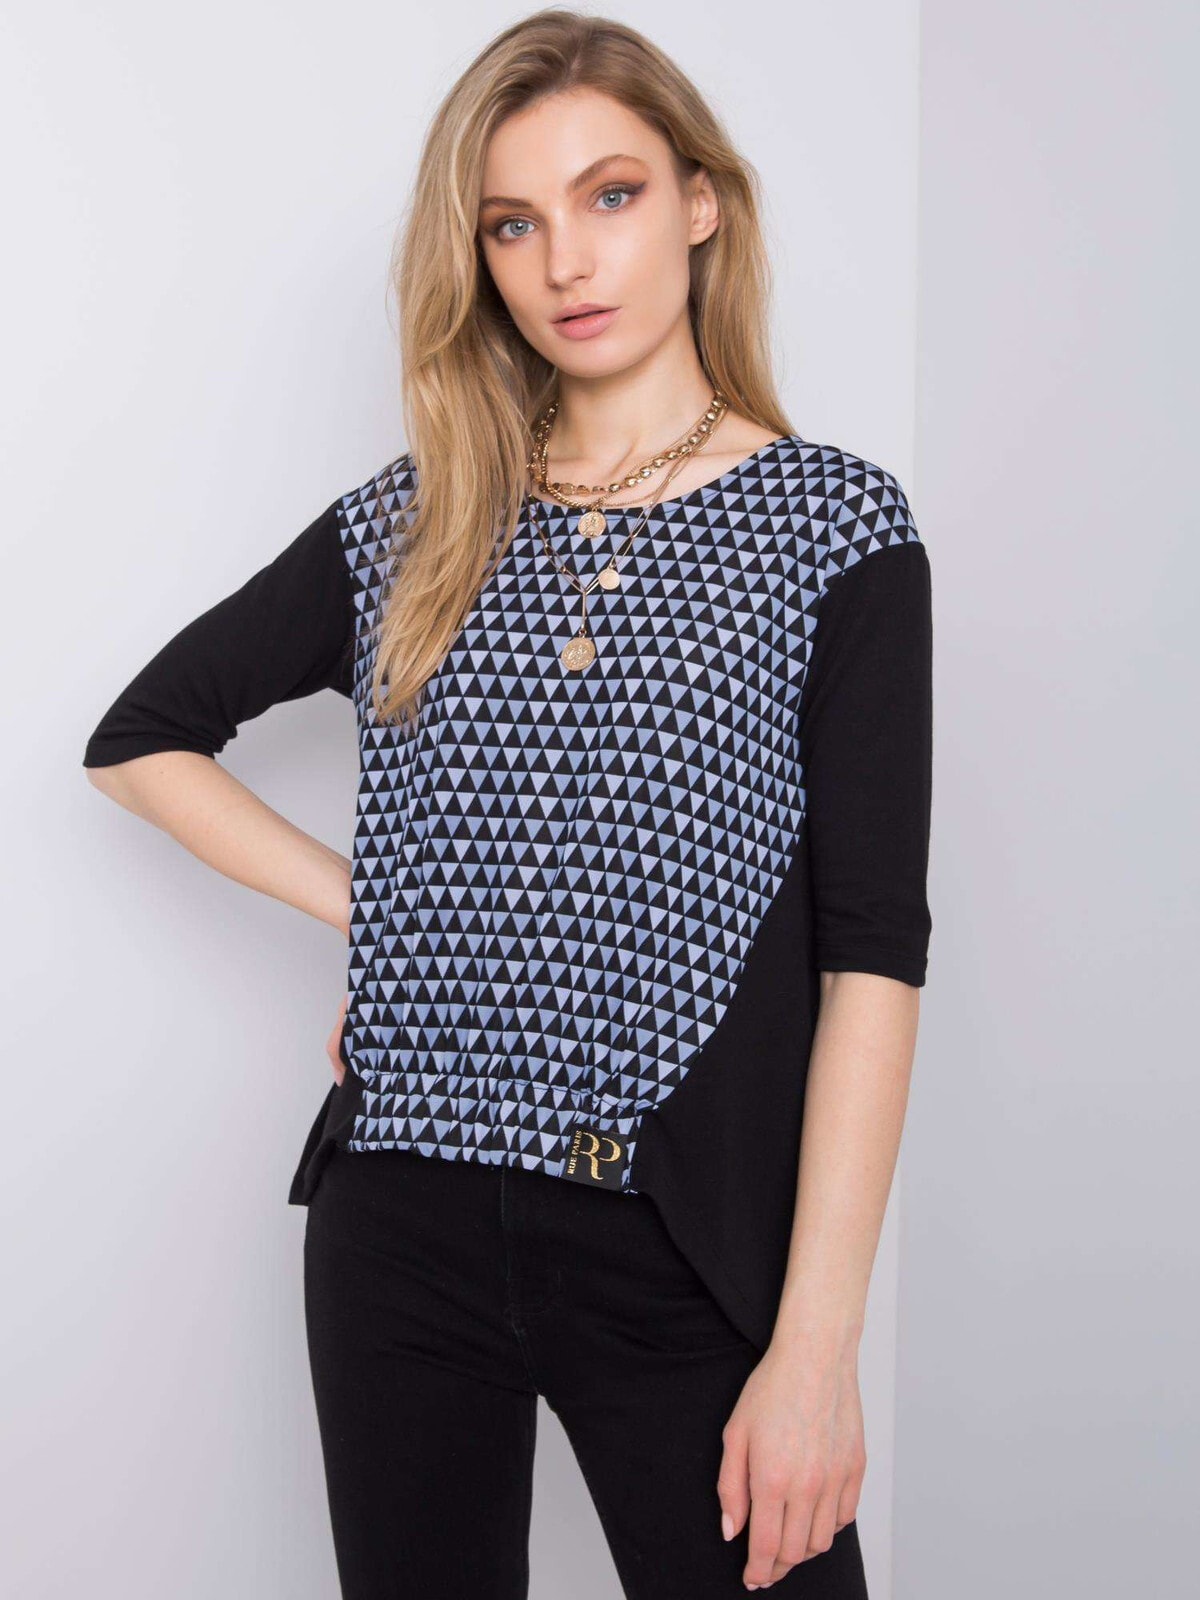 Женская блузка с геометрическим узором  Factory Price